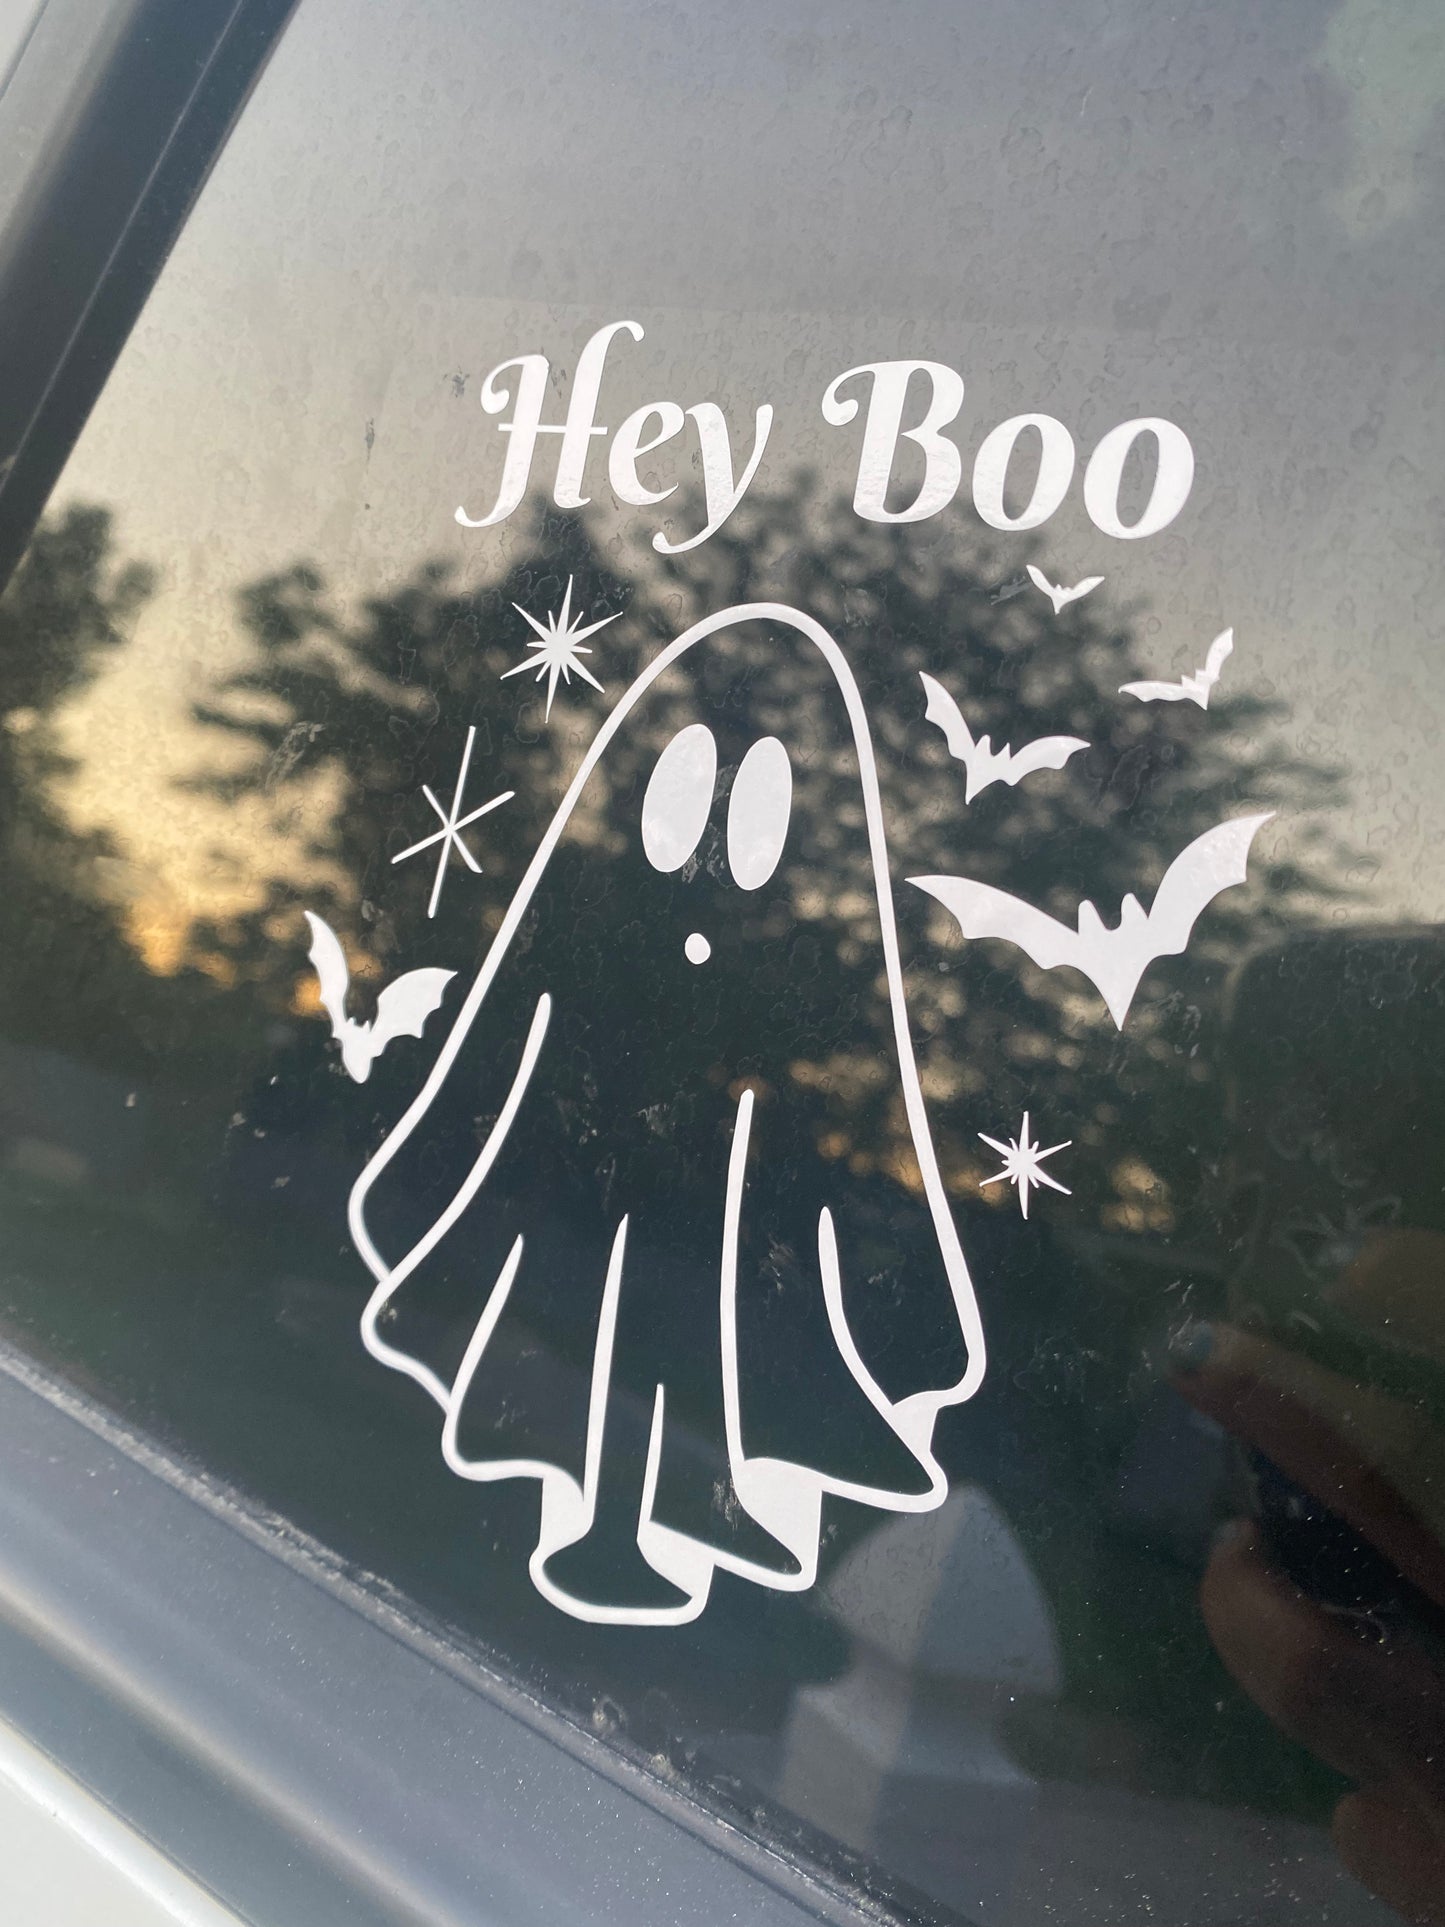 Hey Boo Ghost Car Decal